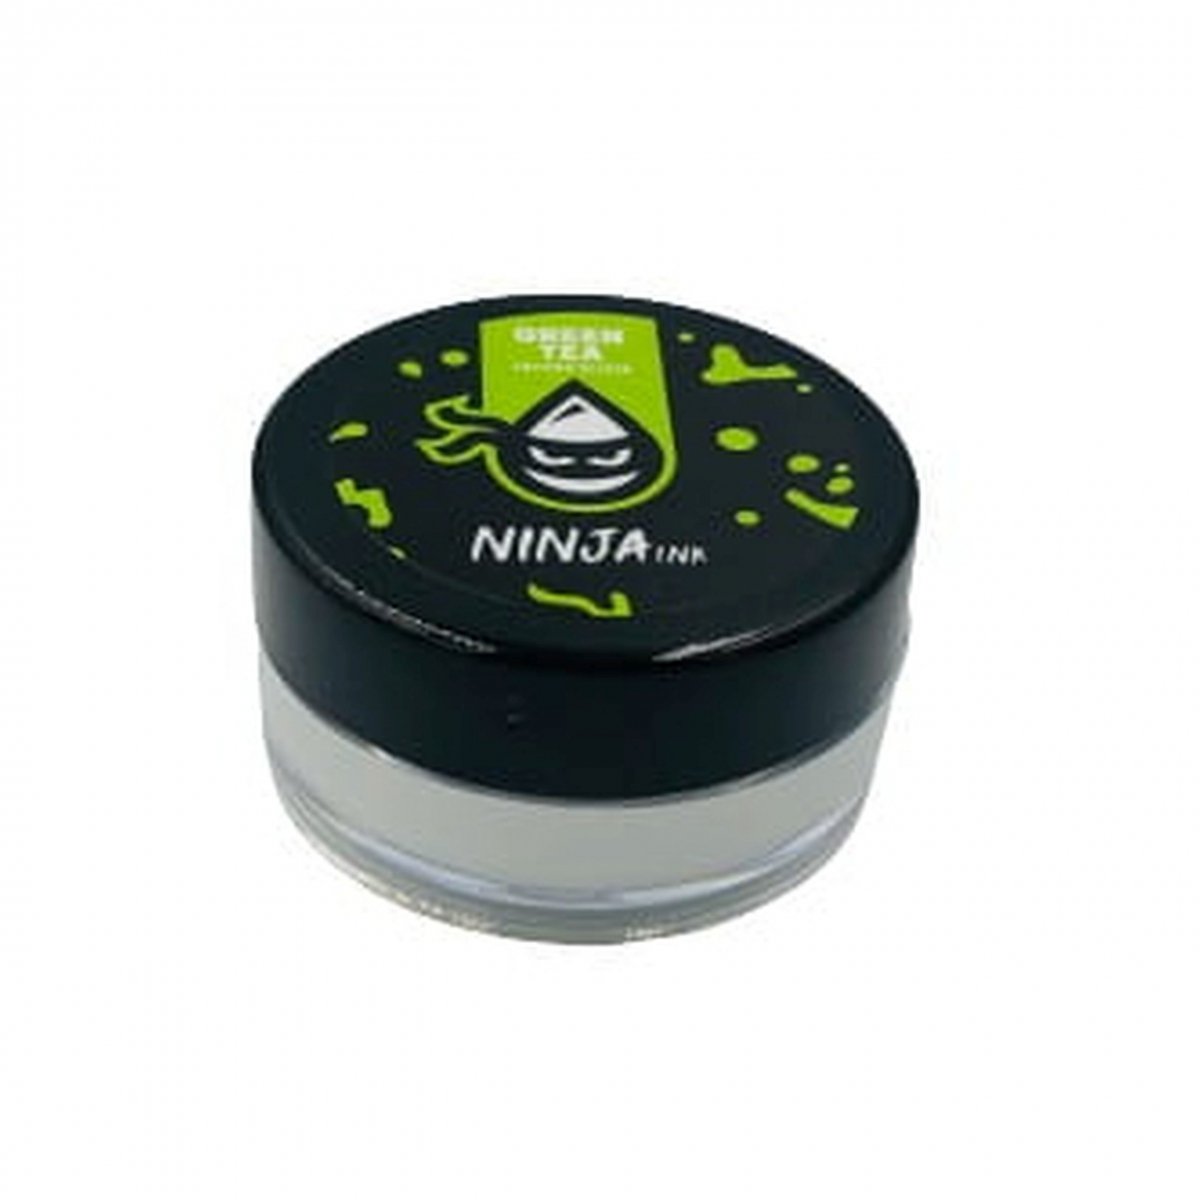 Ninja Ink Tattoo Elixir Green Tea- krem do pielęgnacji tatuażu Zielona Herbata 10 ml